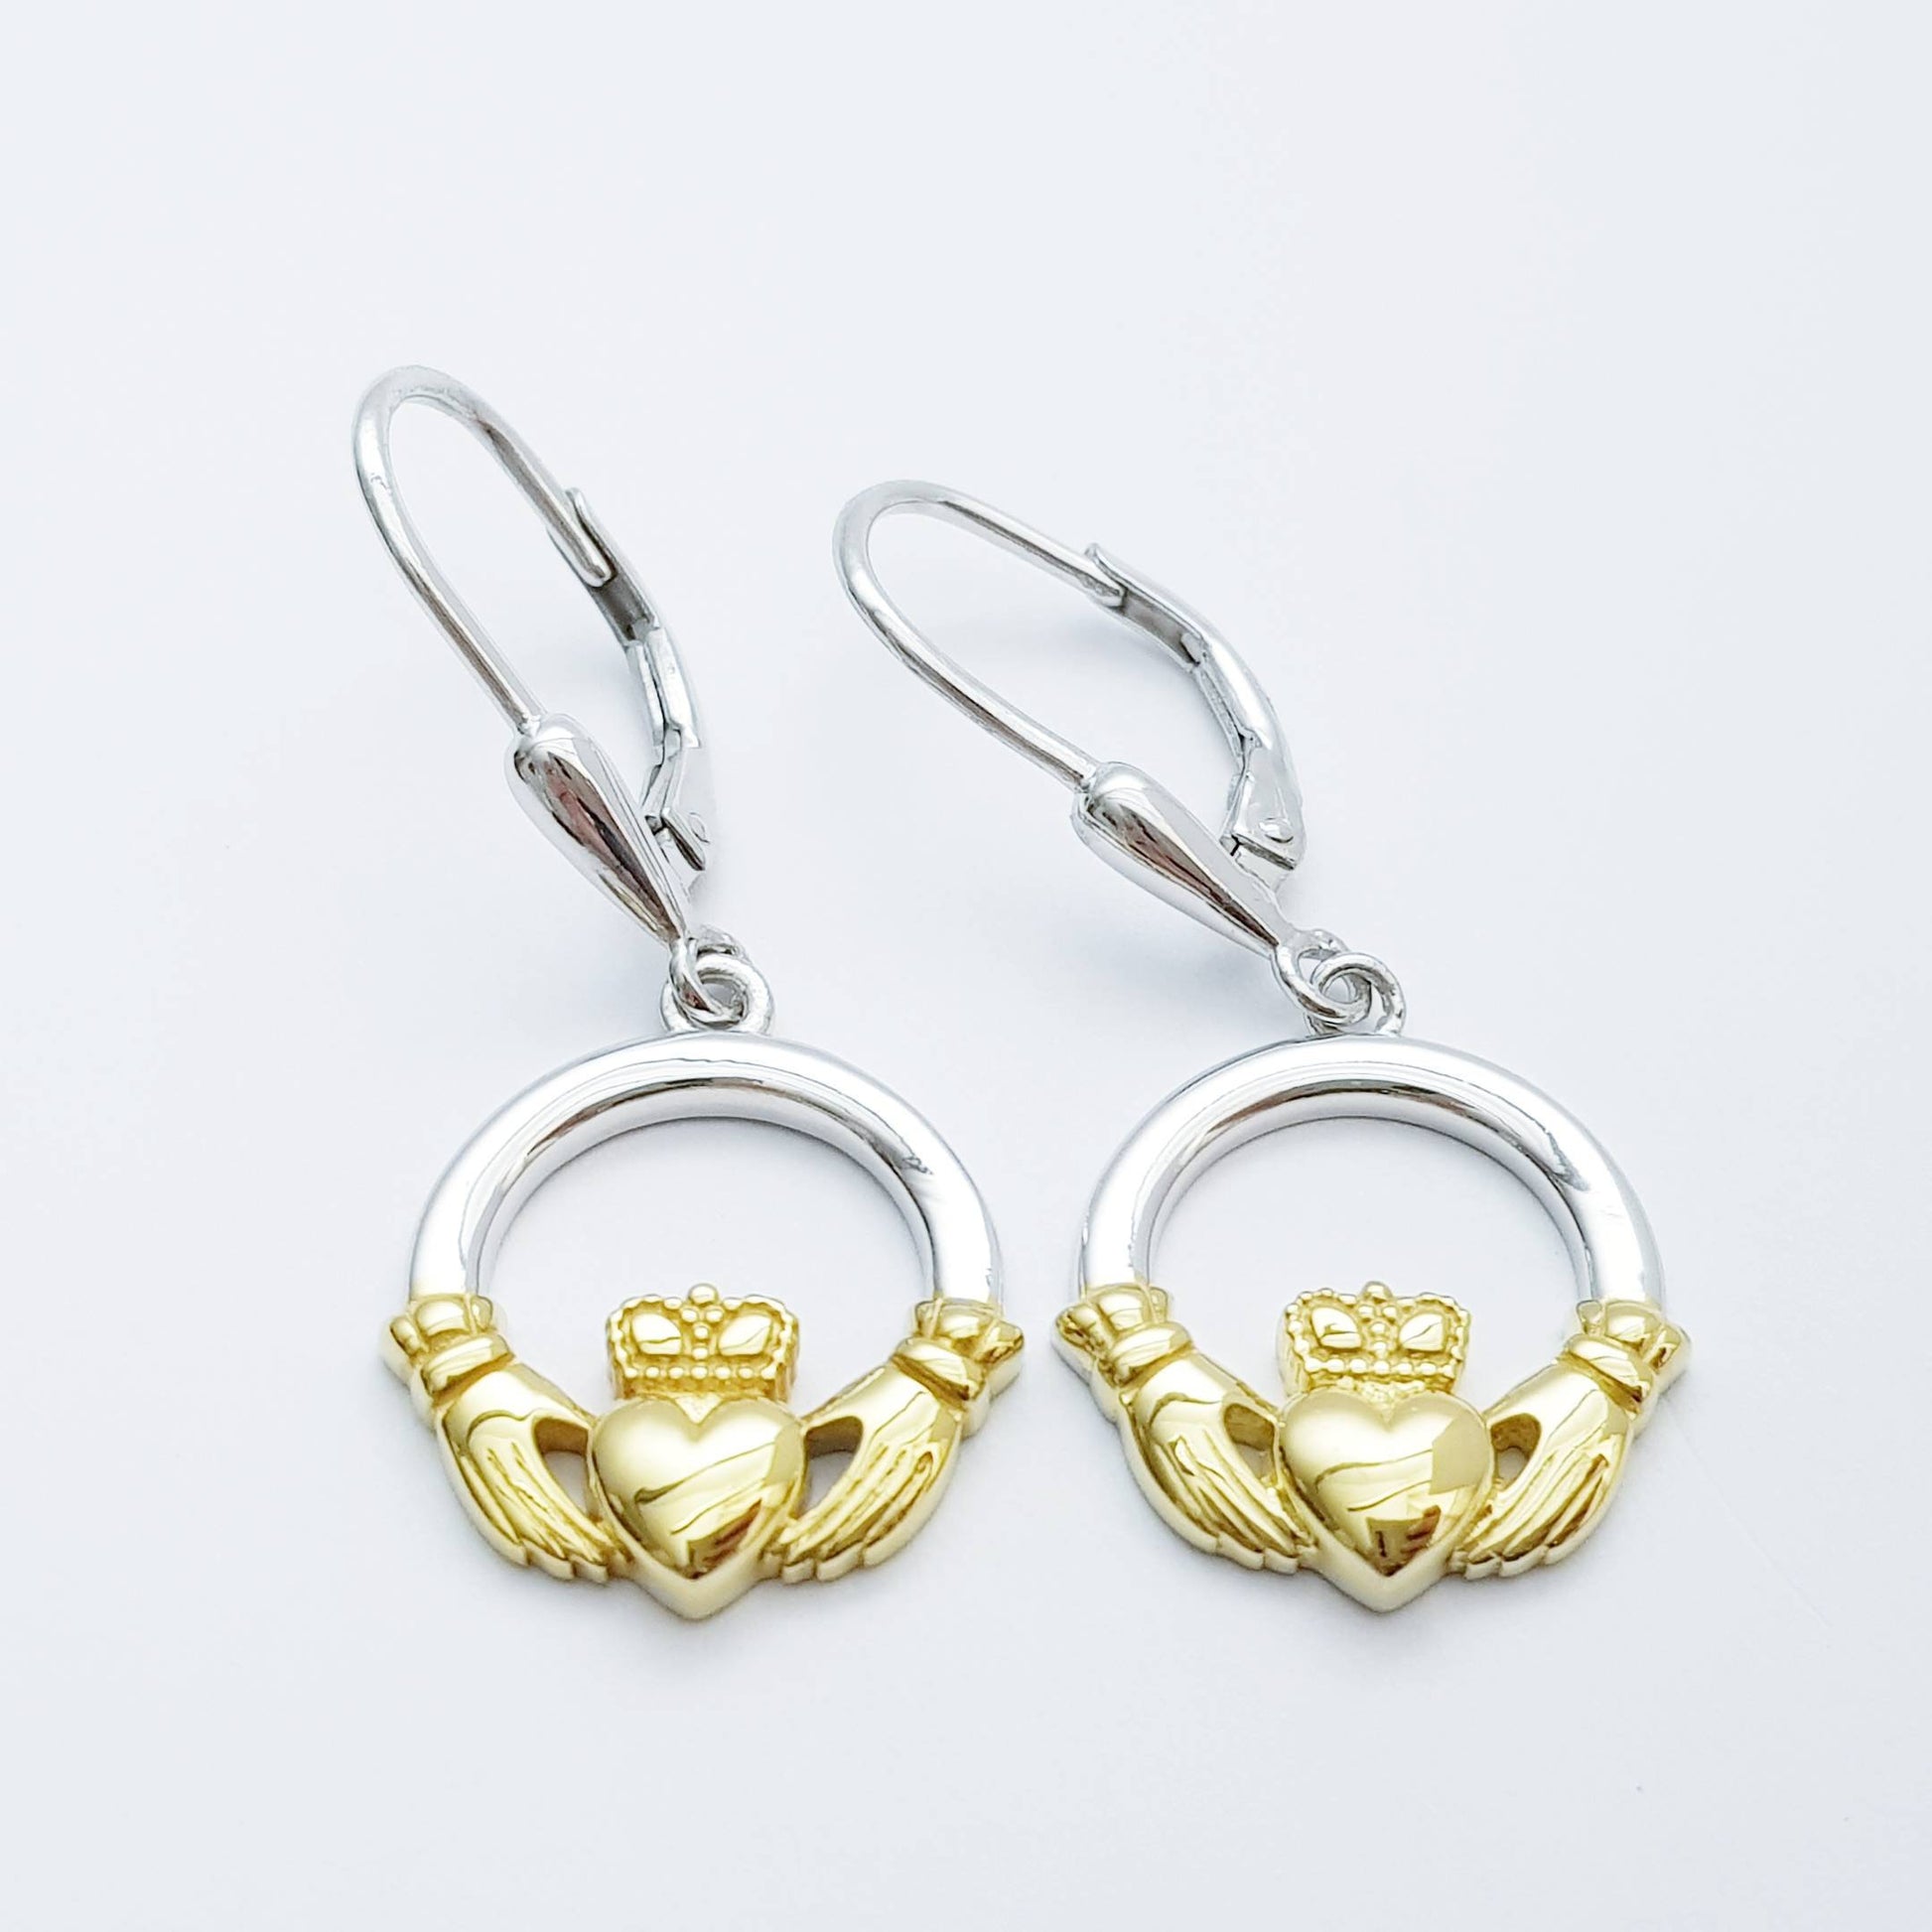 Silver & Gold Claddagh Earrings, Claddagh drop Earrings